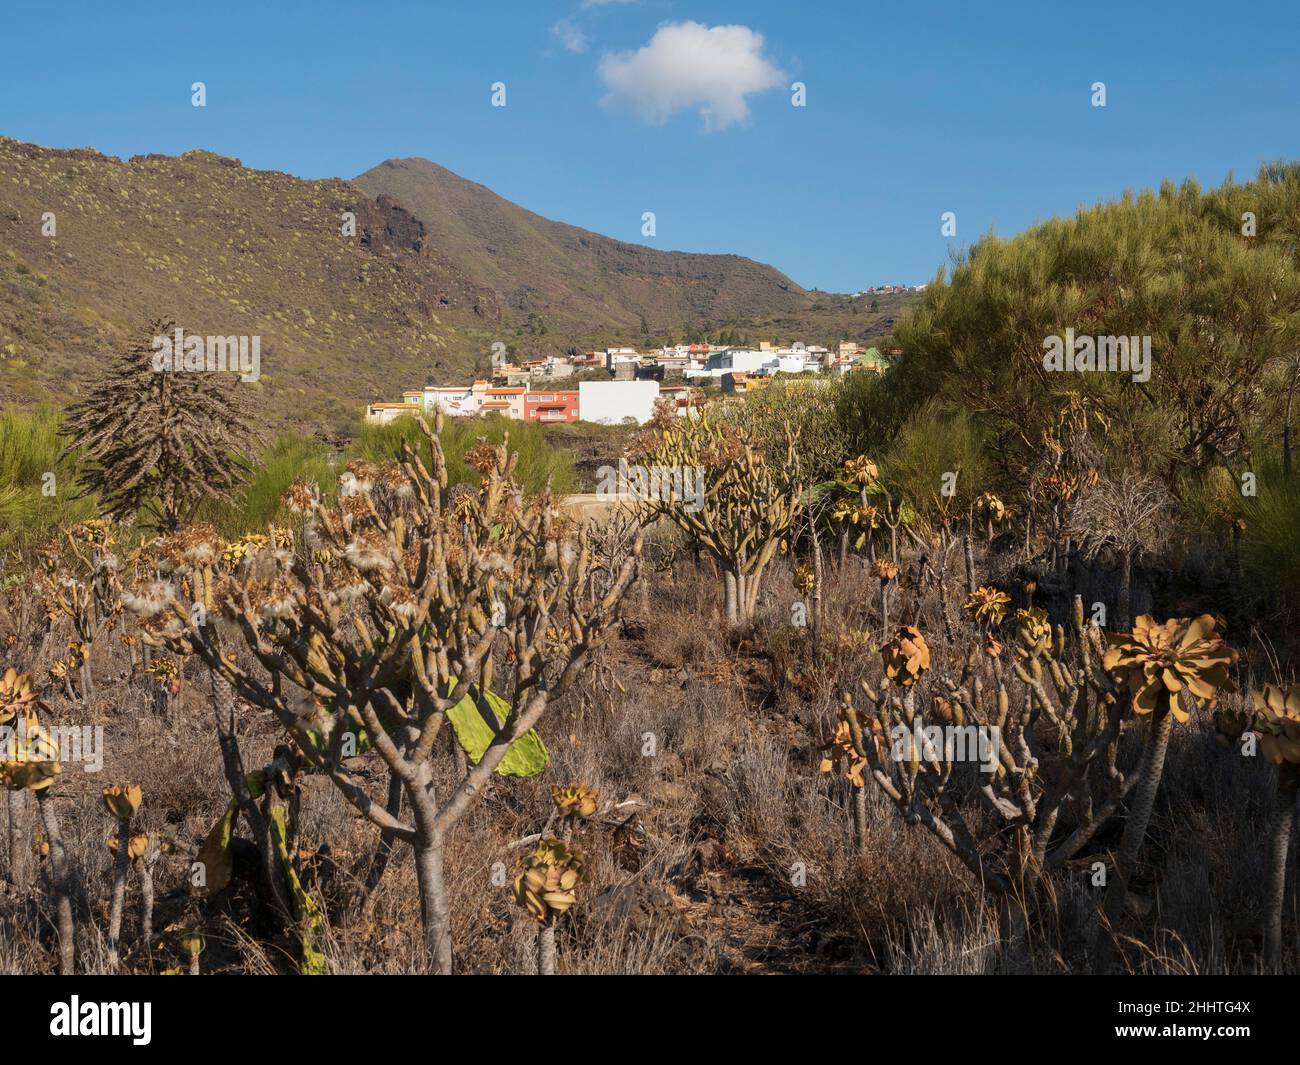 Tamaimo, Santiago del Teide, town in Tenerife. Stock Photo